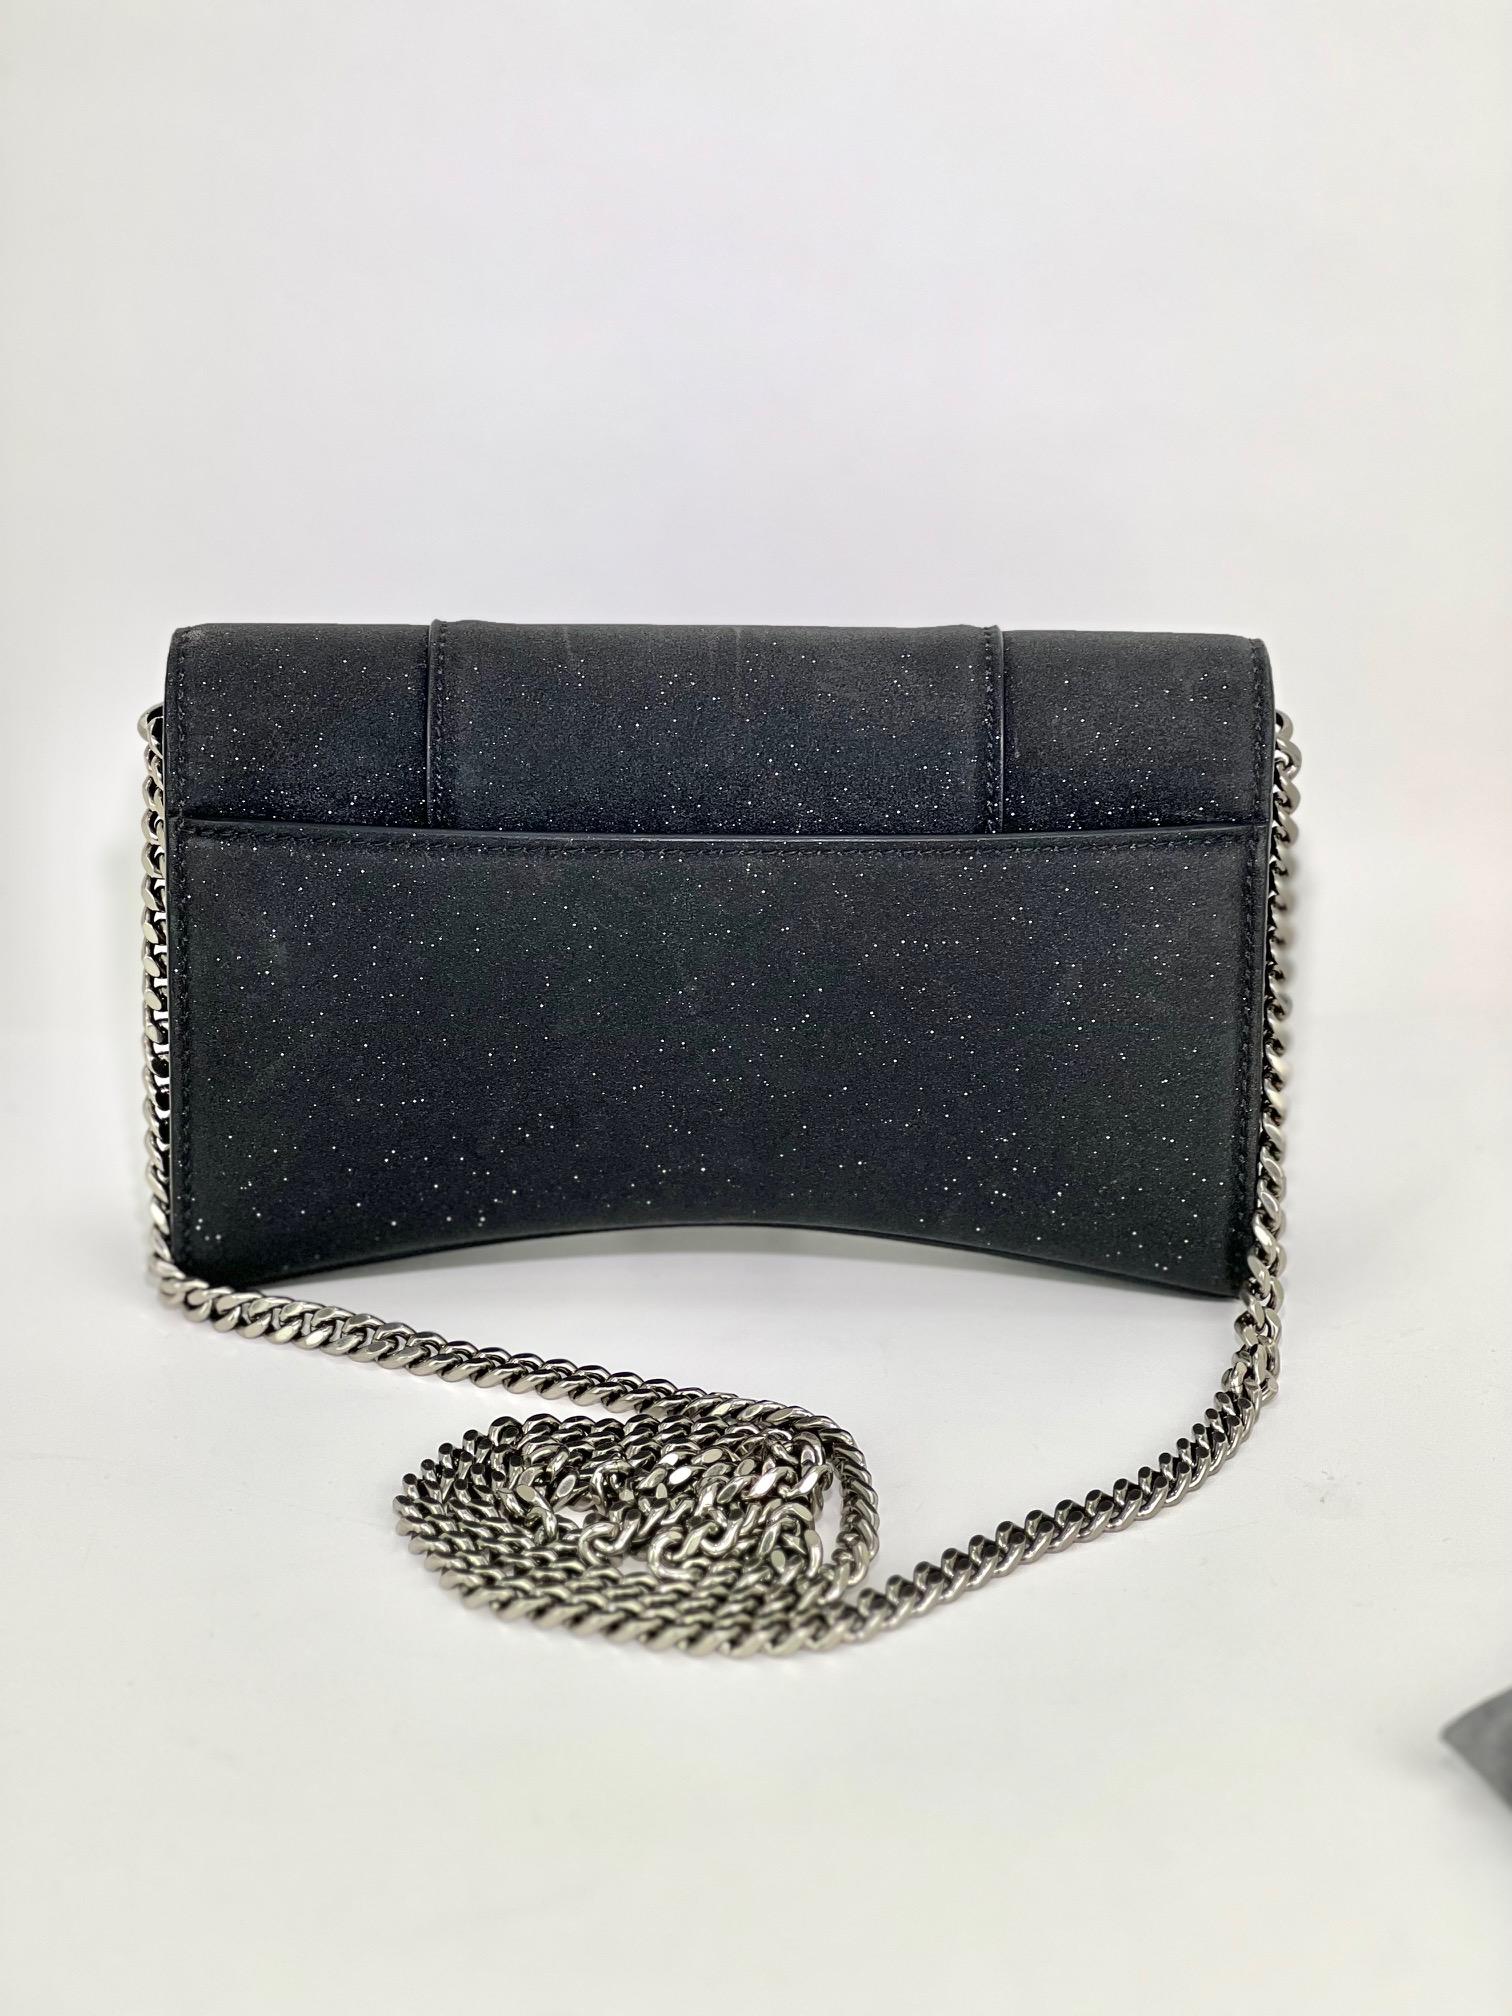 Women's BALENCIAGA Hourglass Wallet On Chain Black Glitter Clutch Shoulder Bag For Sale